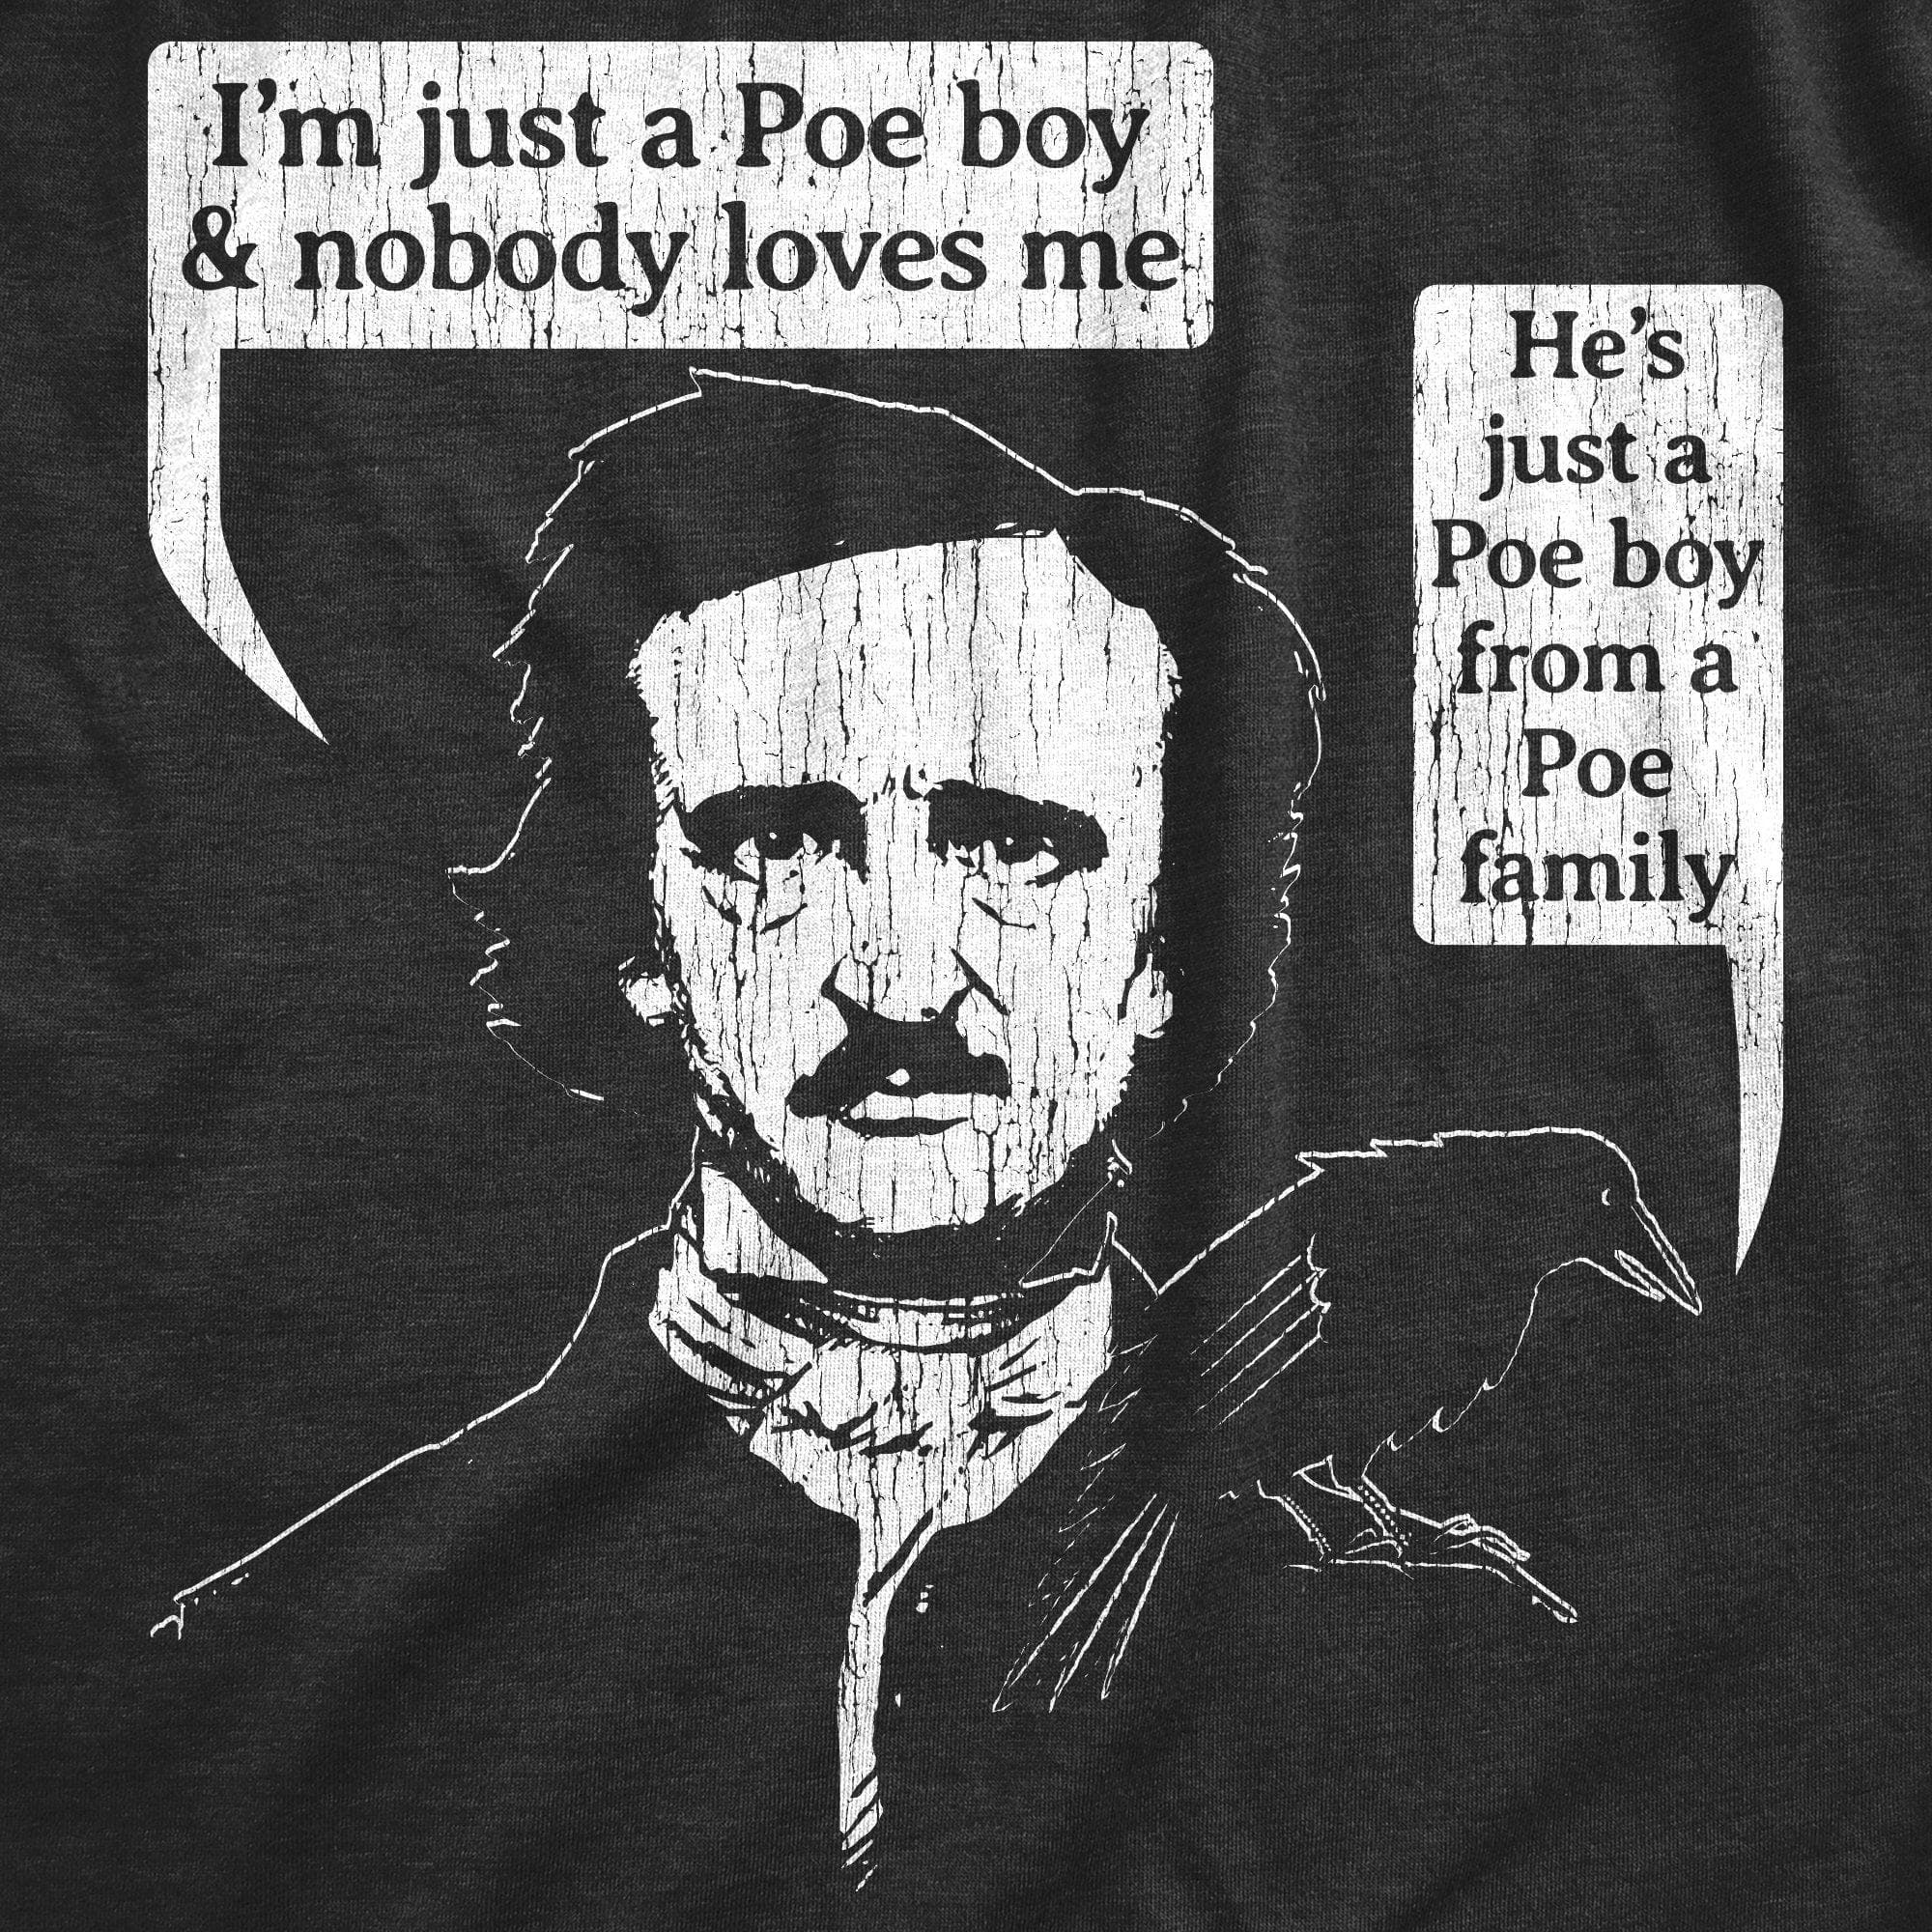 Poe Boy Women's Tshirt - Crazy Dog T-Shirts